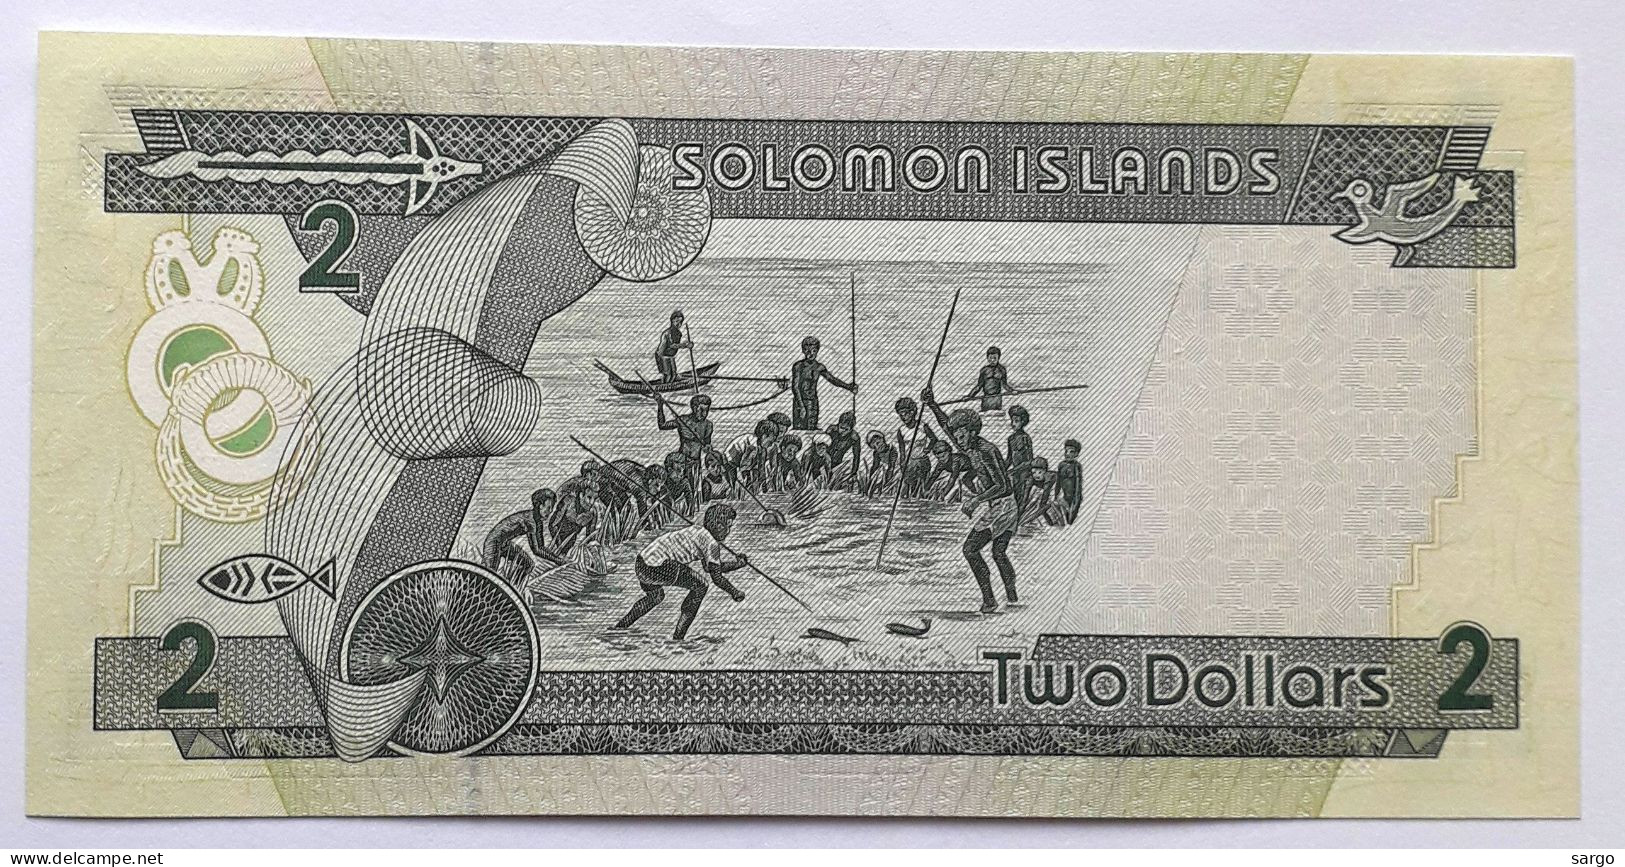 SOLOMON  - 2 DOLLARS - P 18  (1997) - UNC -  BANKNOTES - PAPER MONEY - Sao Tome And Principe